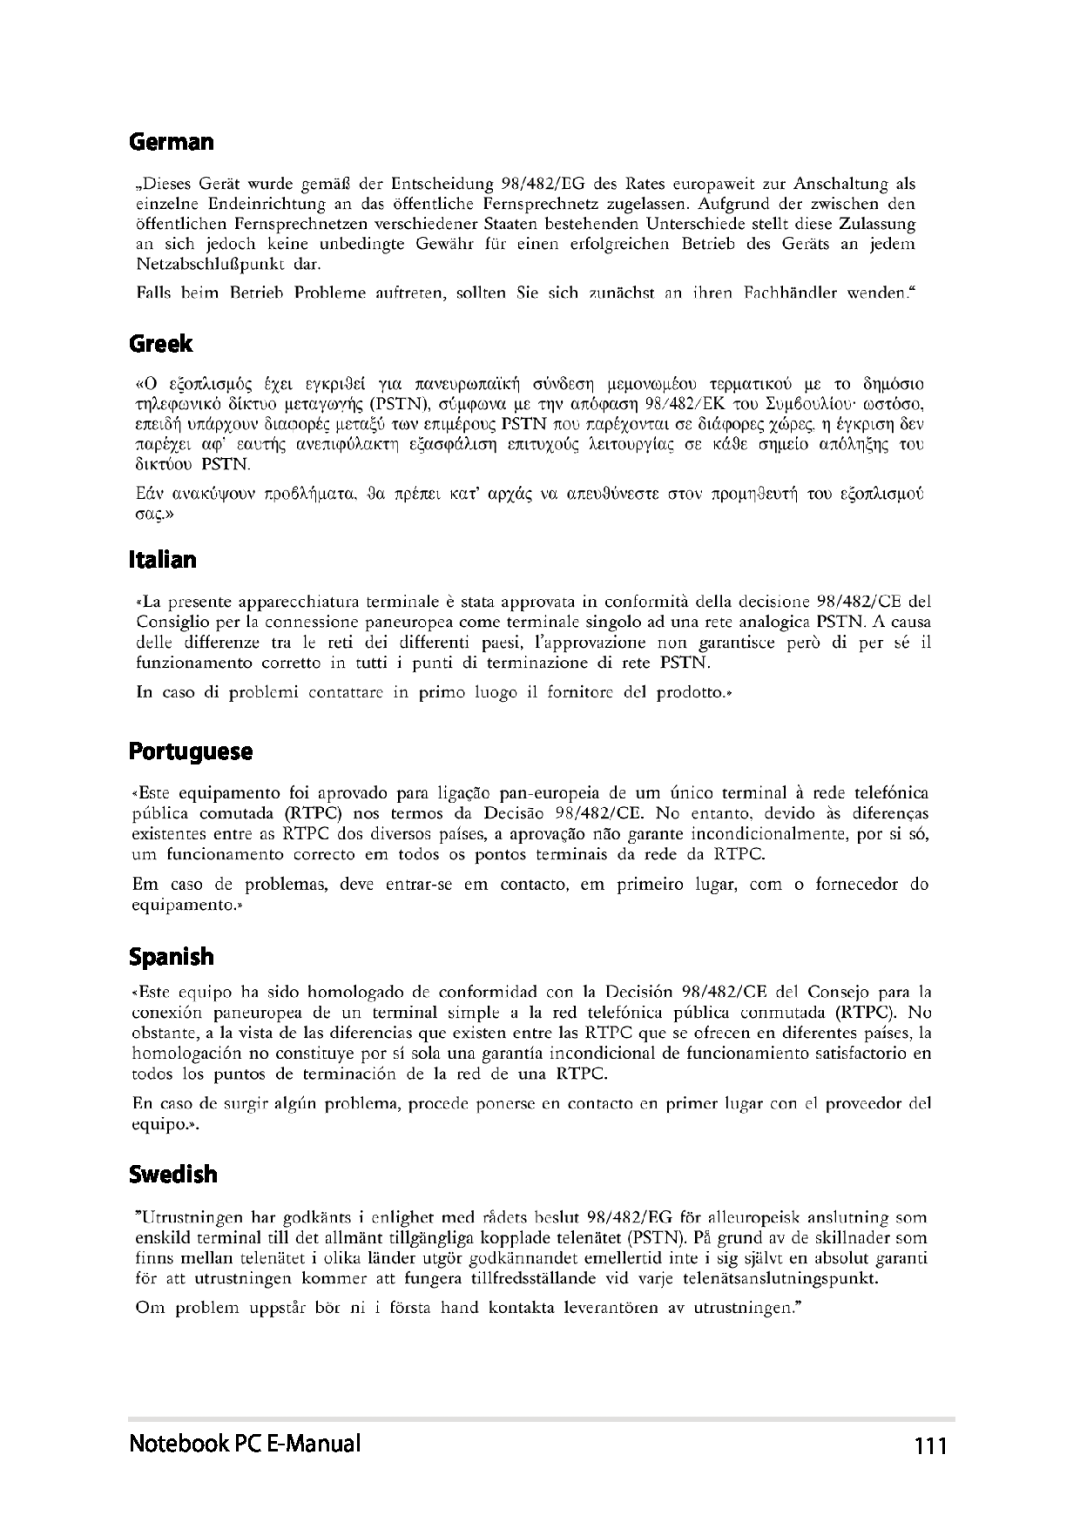 Asus E8438 manual German Greek Italian Portuguese Spanish Swedish, Notebook PC E-Manual 